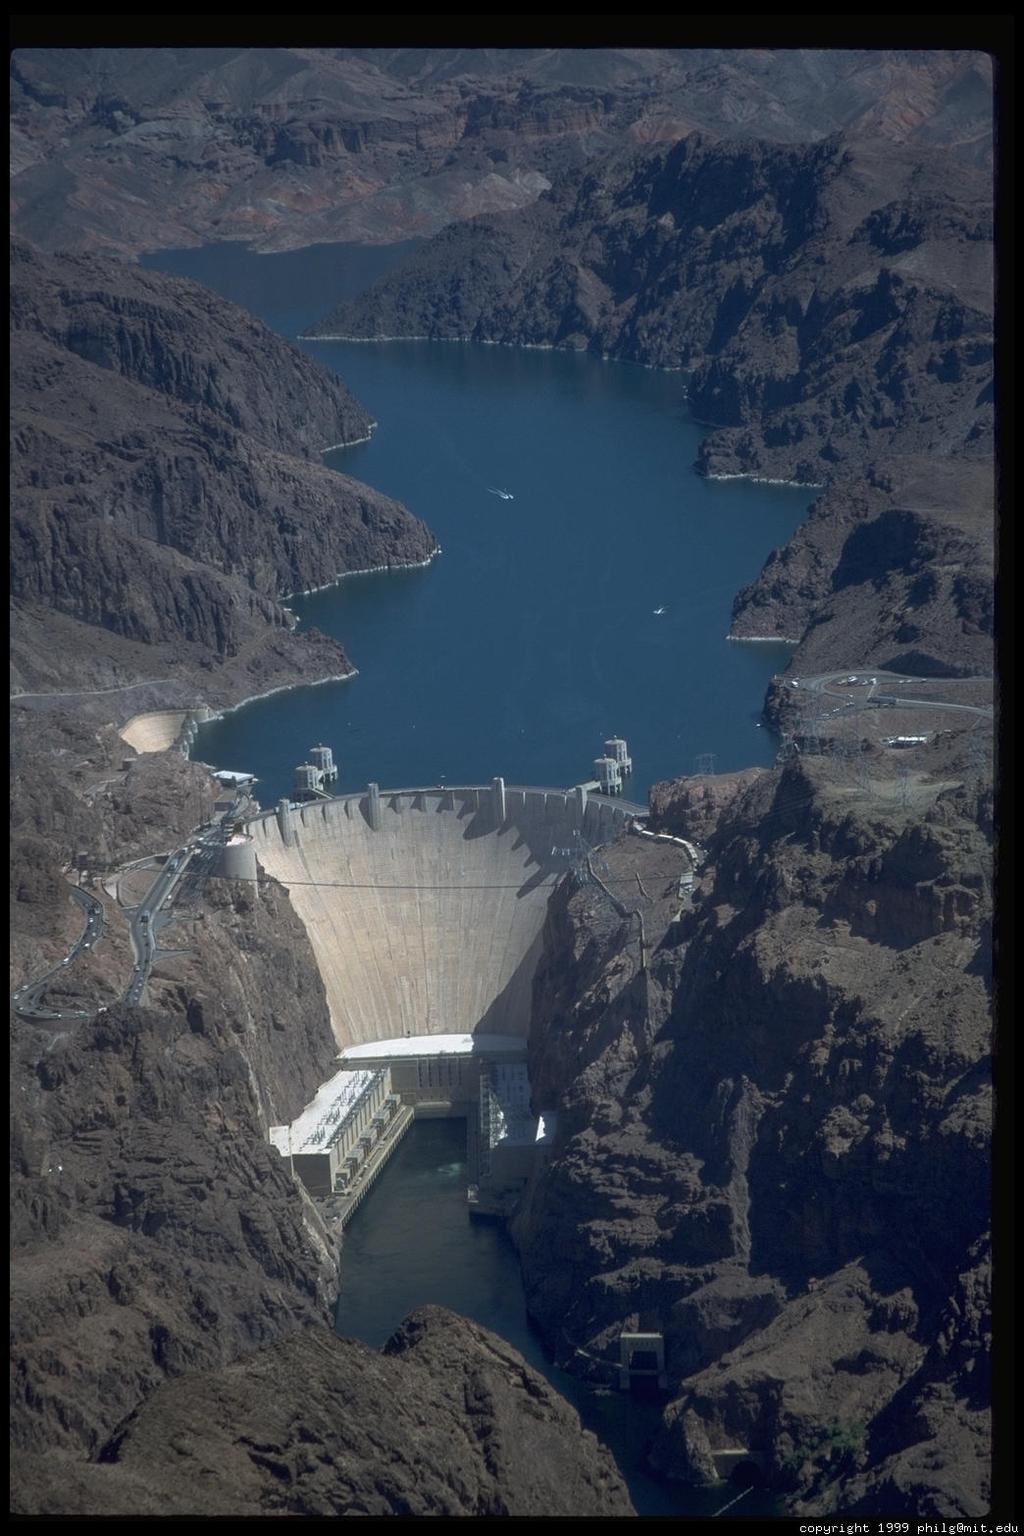 Gravitational energy The Hoover dam generates 4 billion